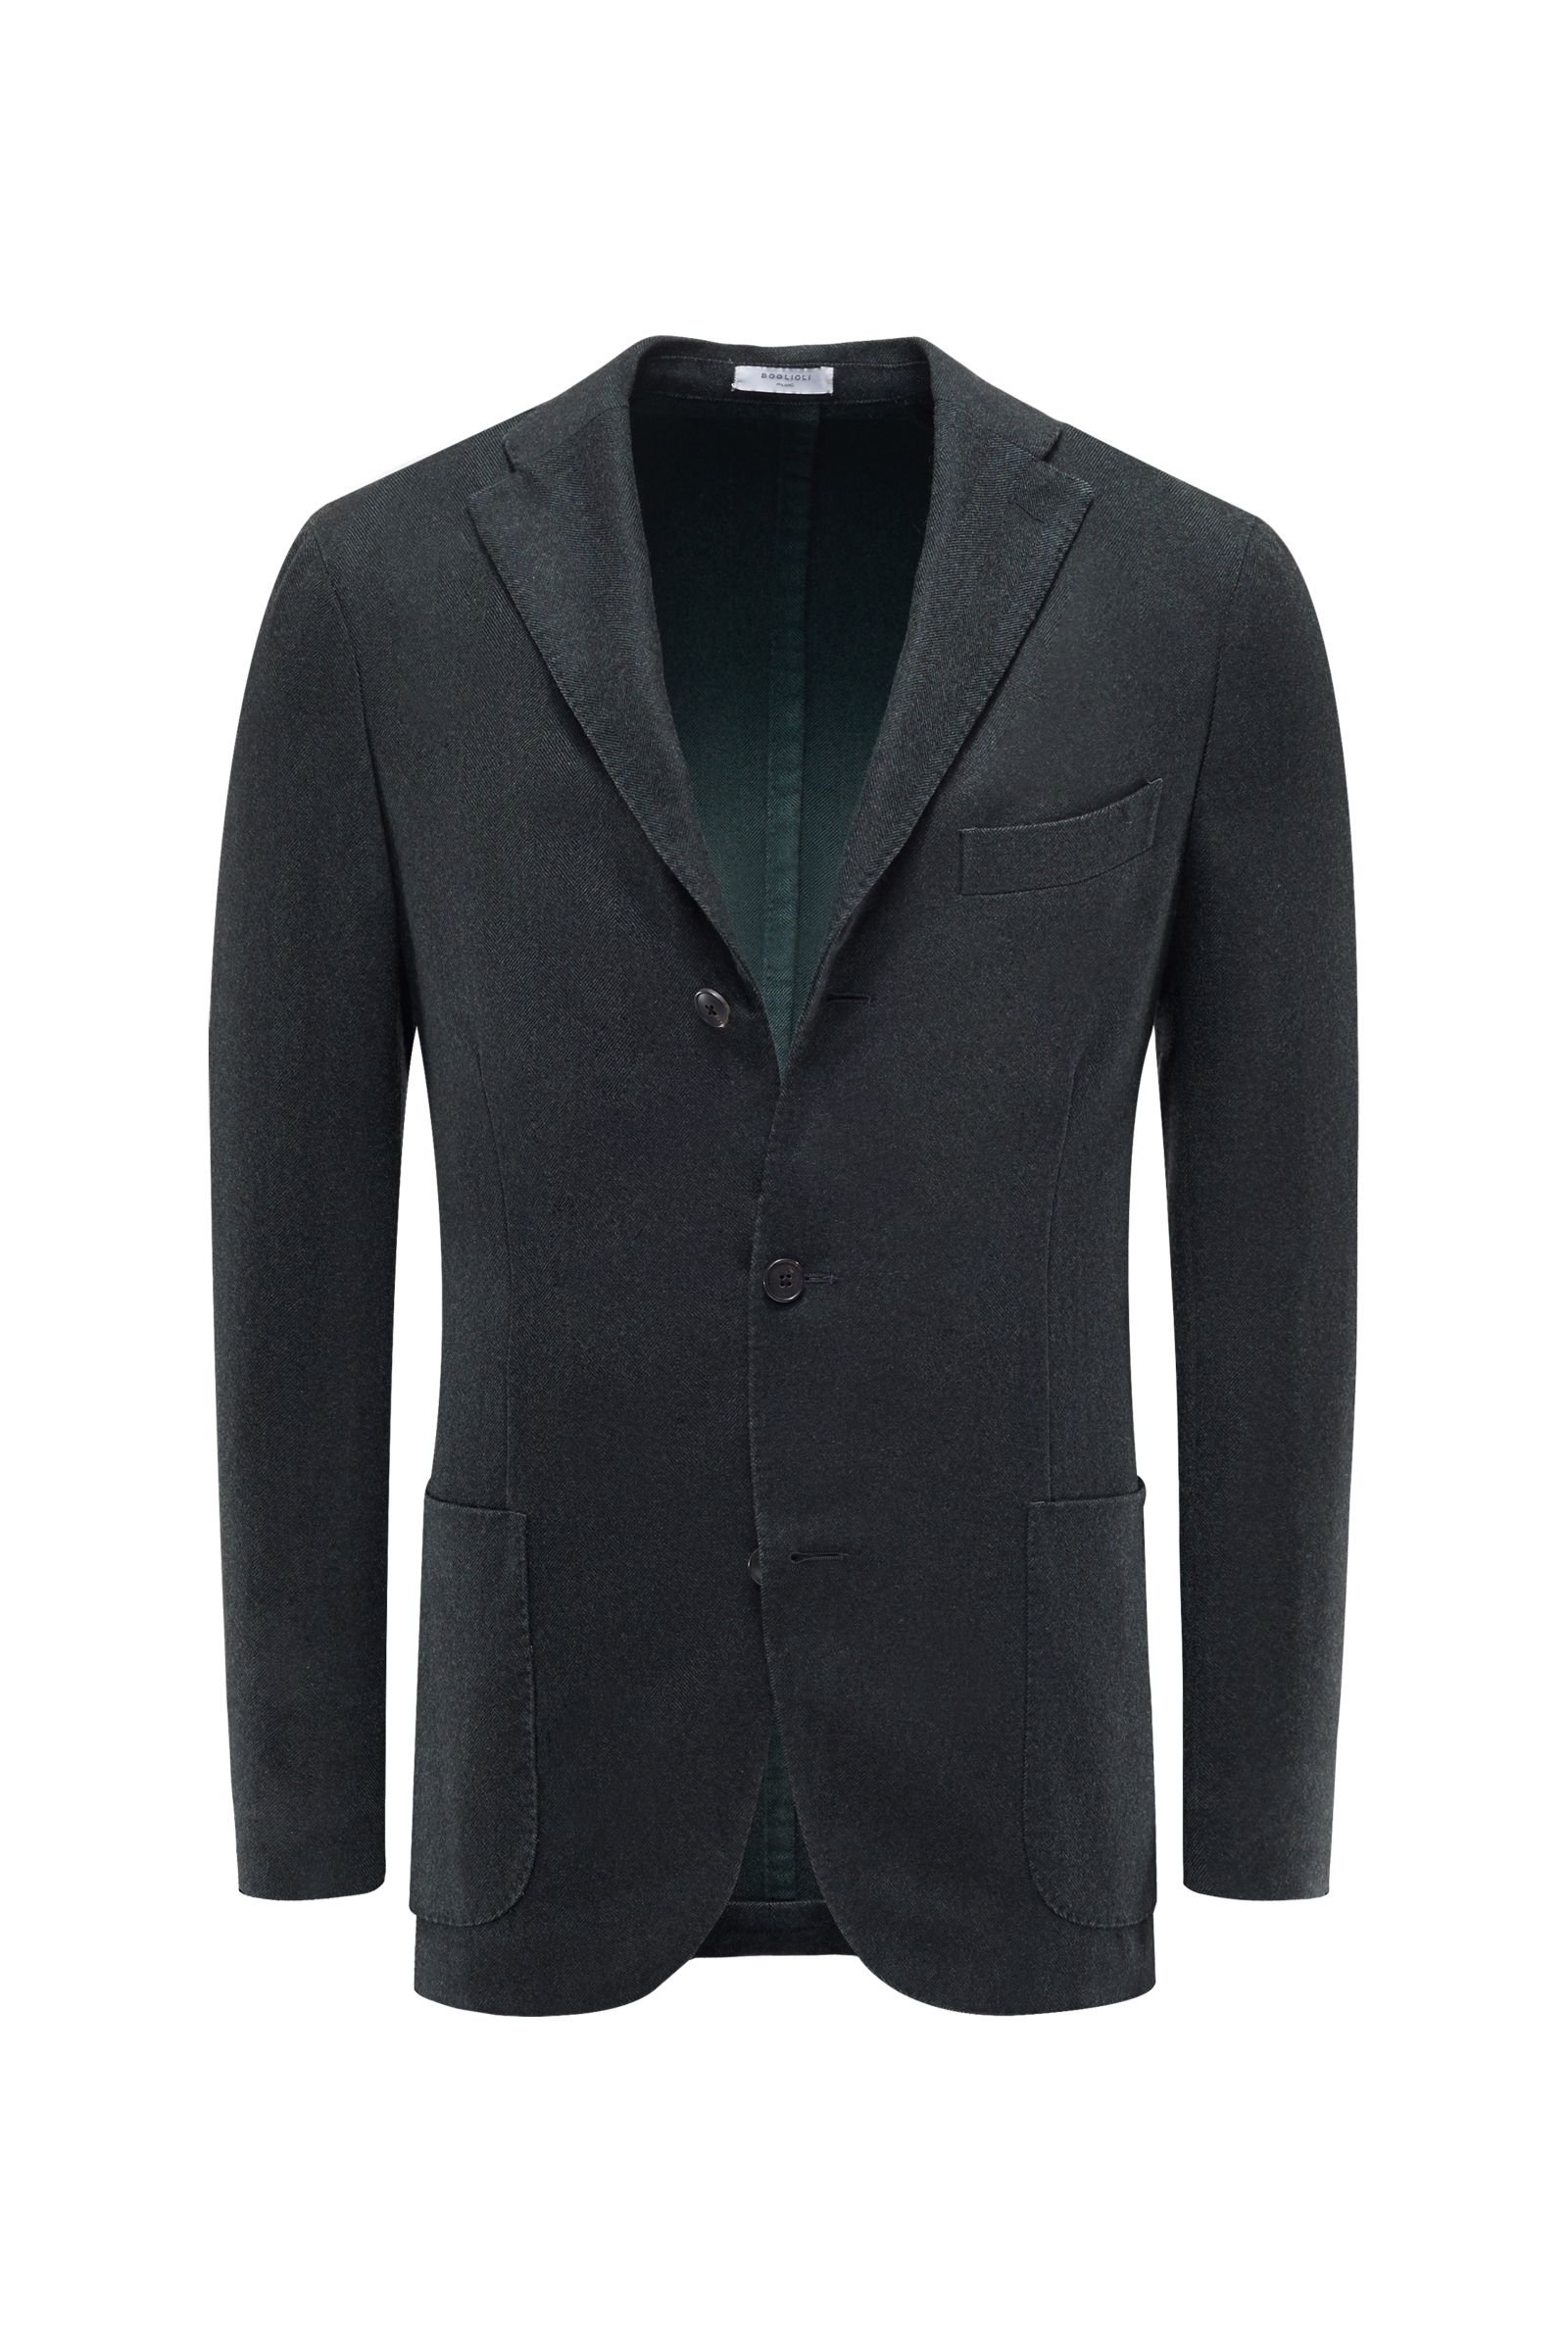 Cashmere smart-casual jacket dark green